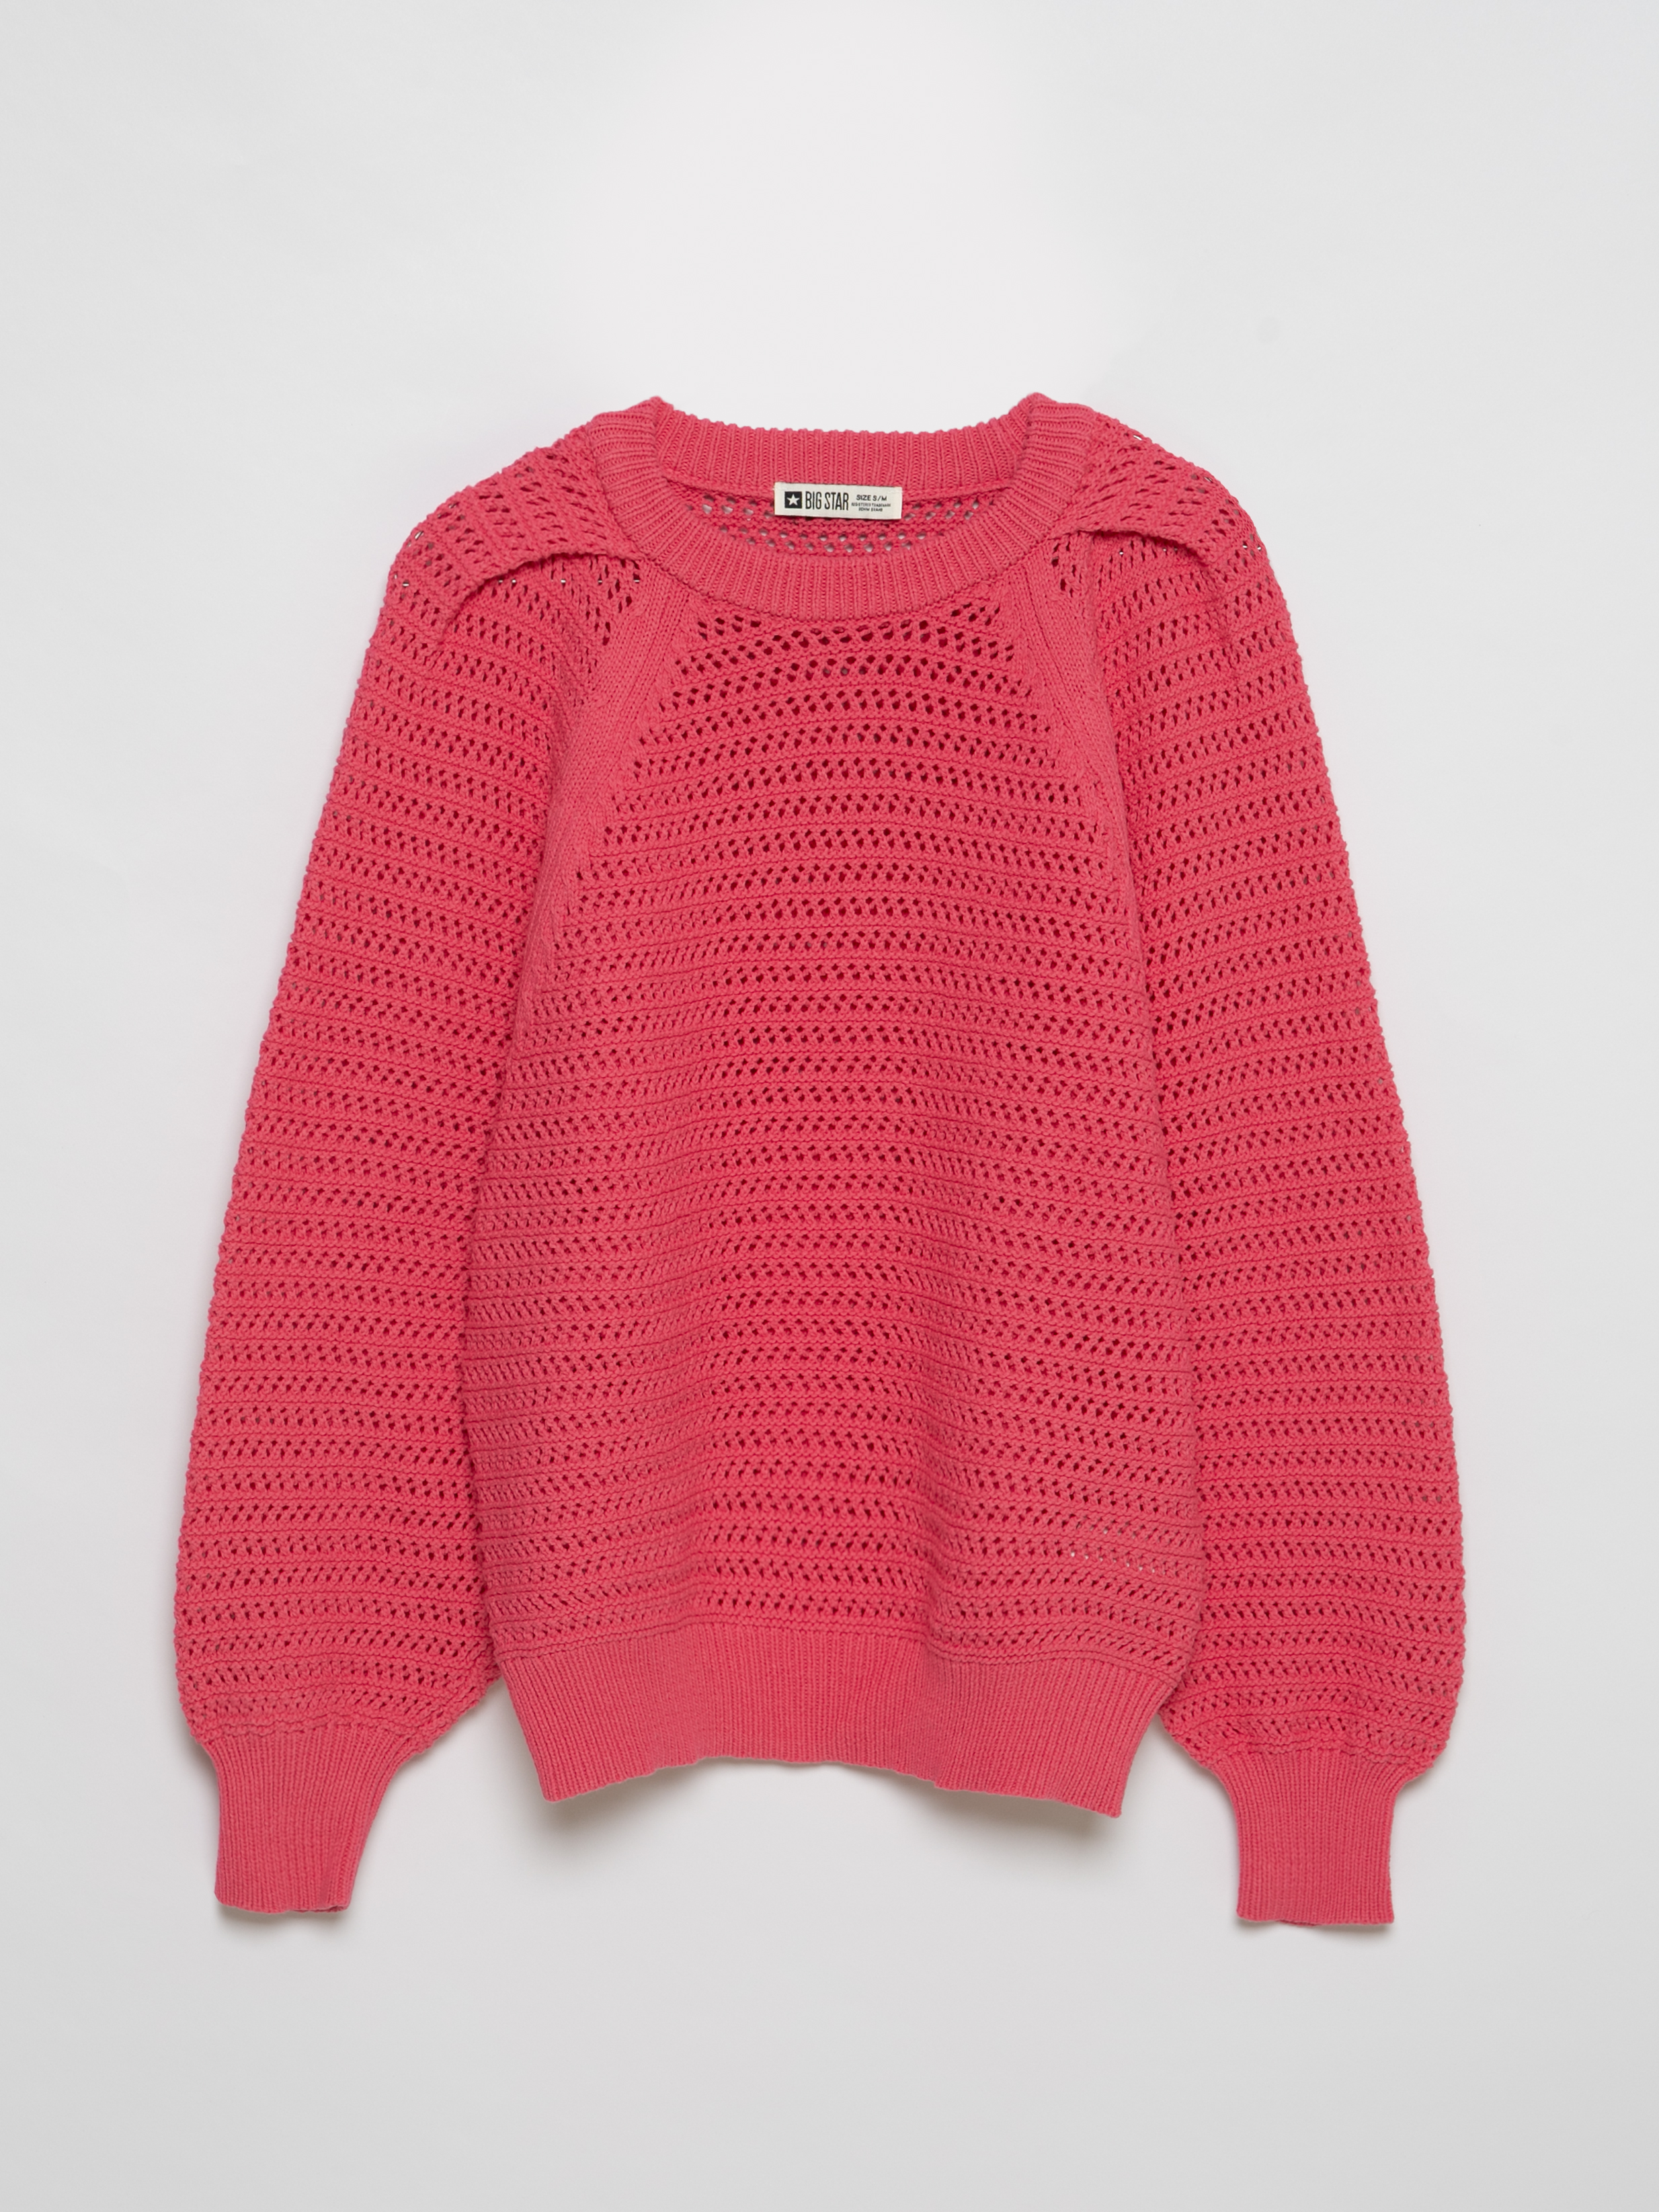 Big Star Woman's Sweater 161039 -601